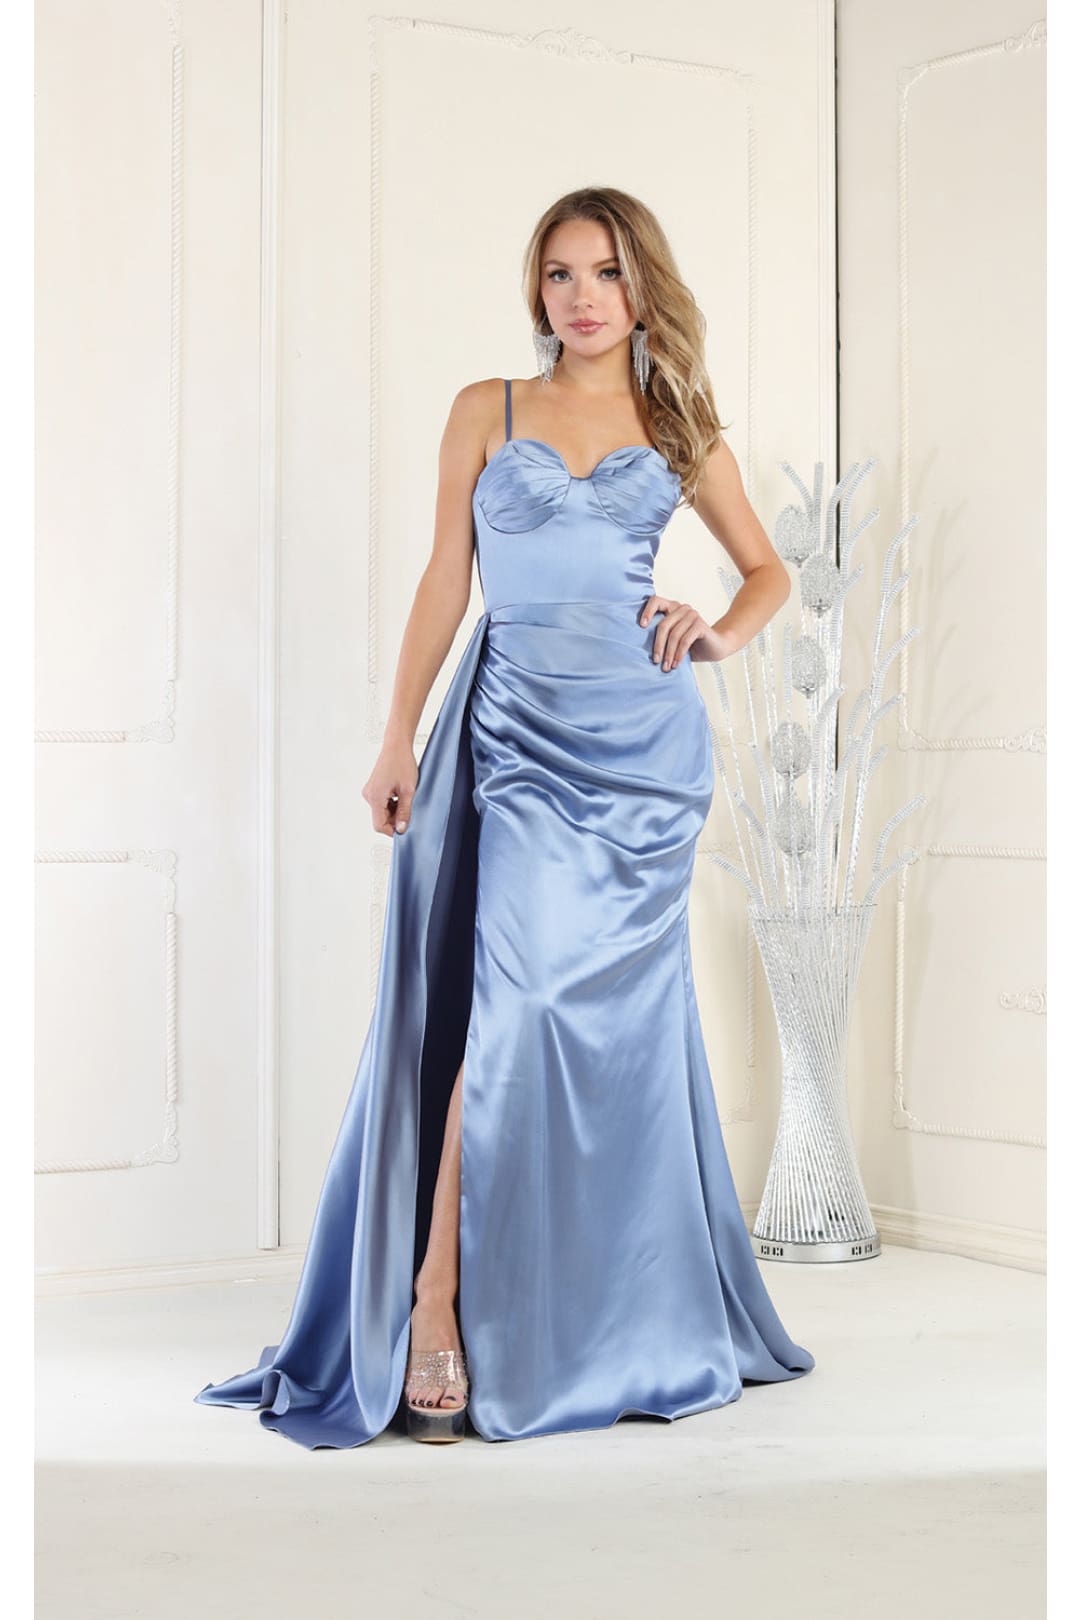 Royal Queen RQ7960 Satin Simple Bridesmaids Dress - DUSTYBLUE / 4 - Dress